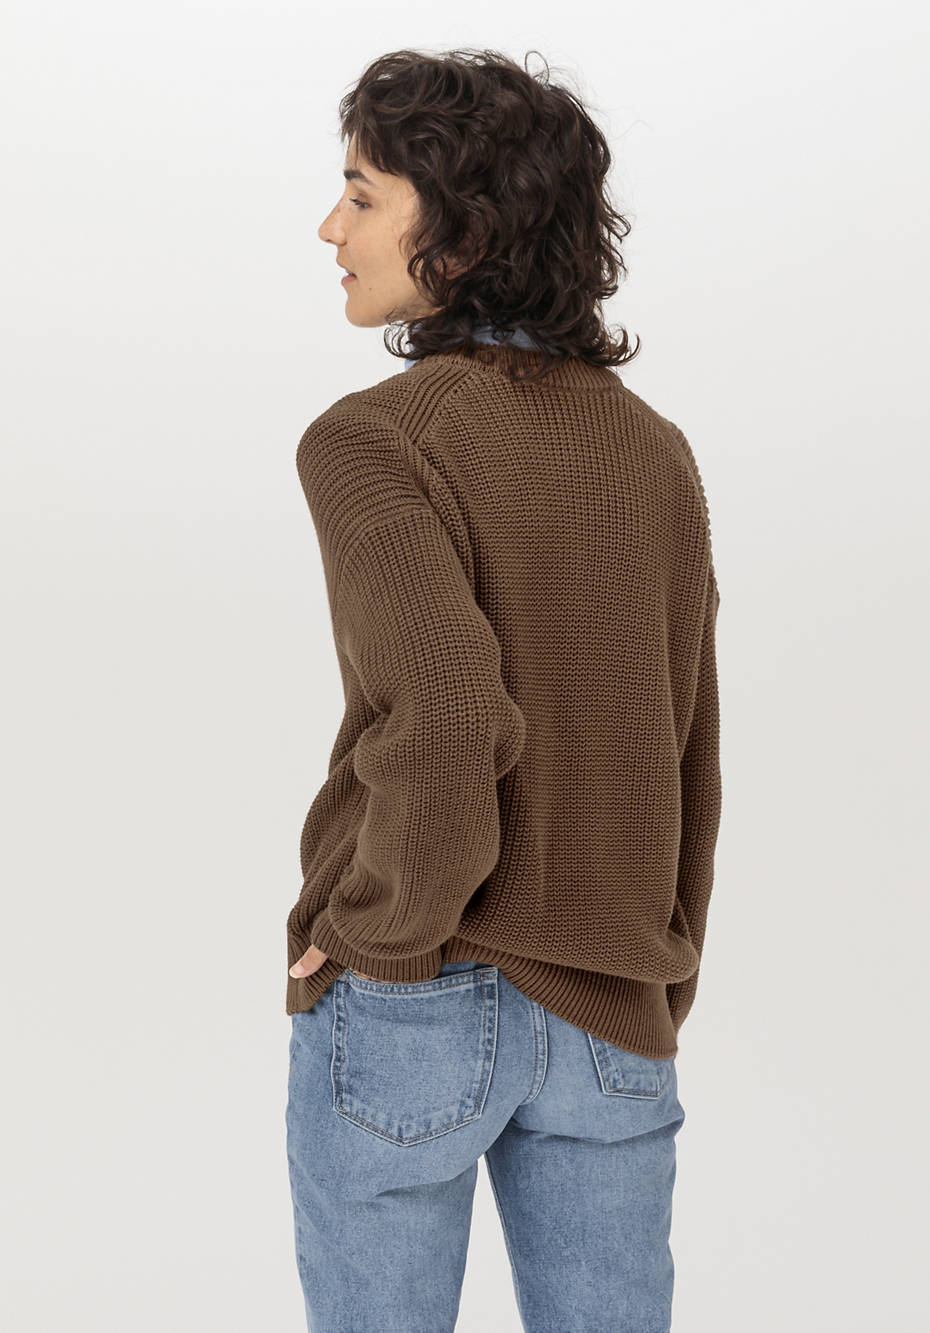 Rib knit round-neck cardigan made of organic cotton yarn - brown